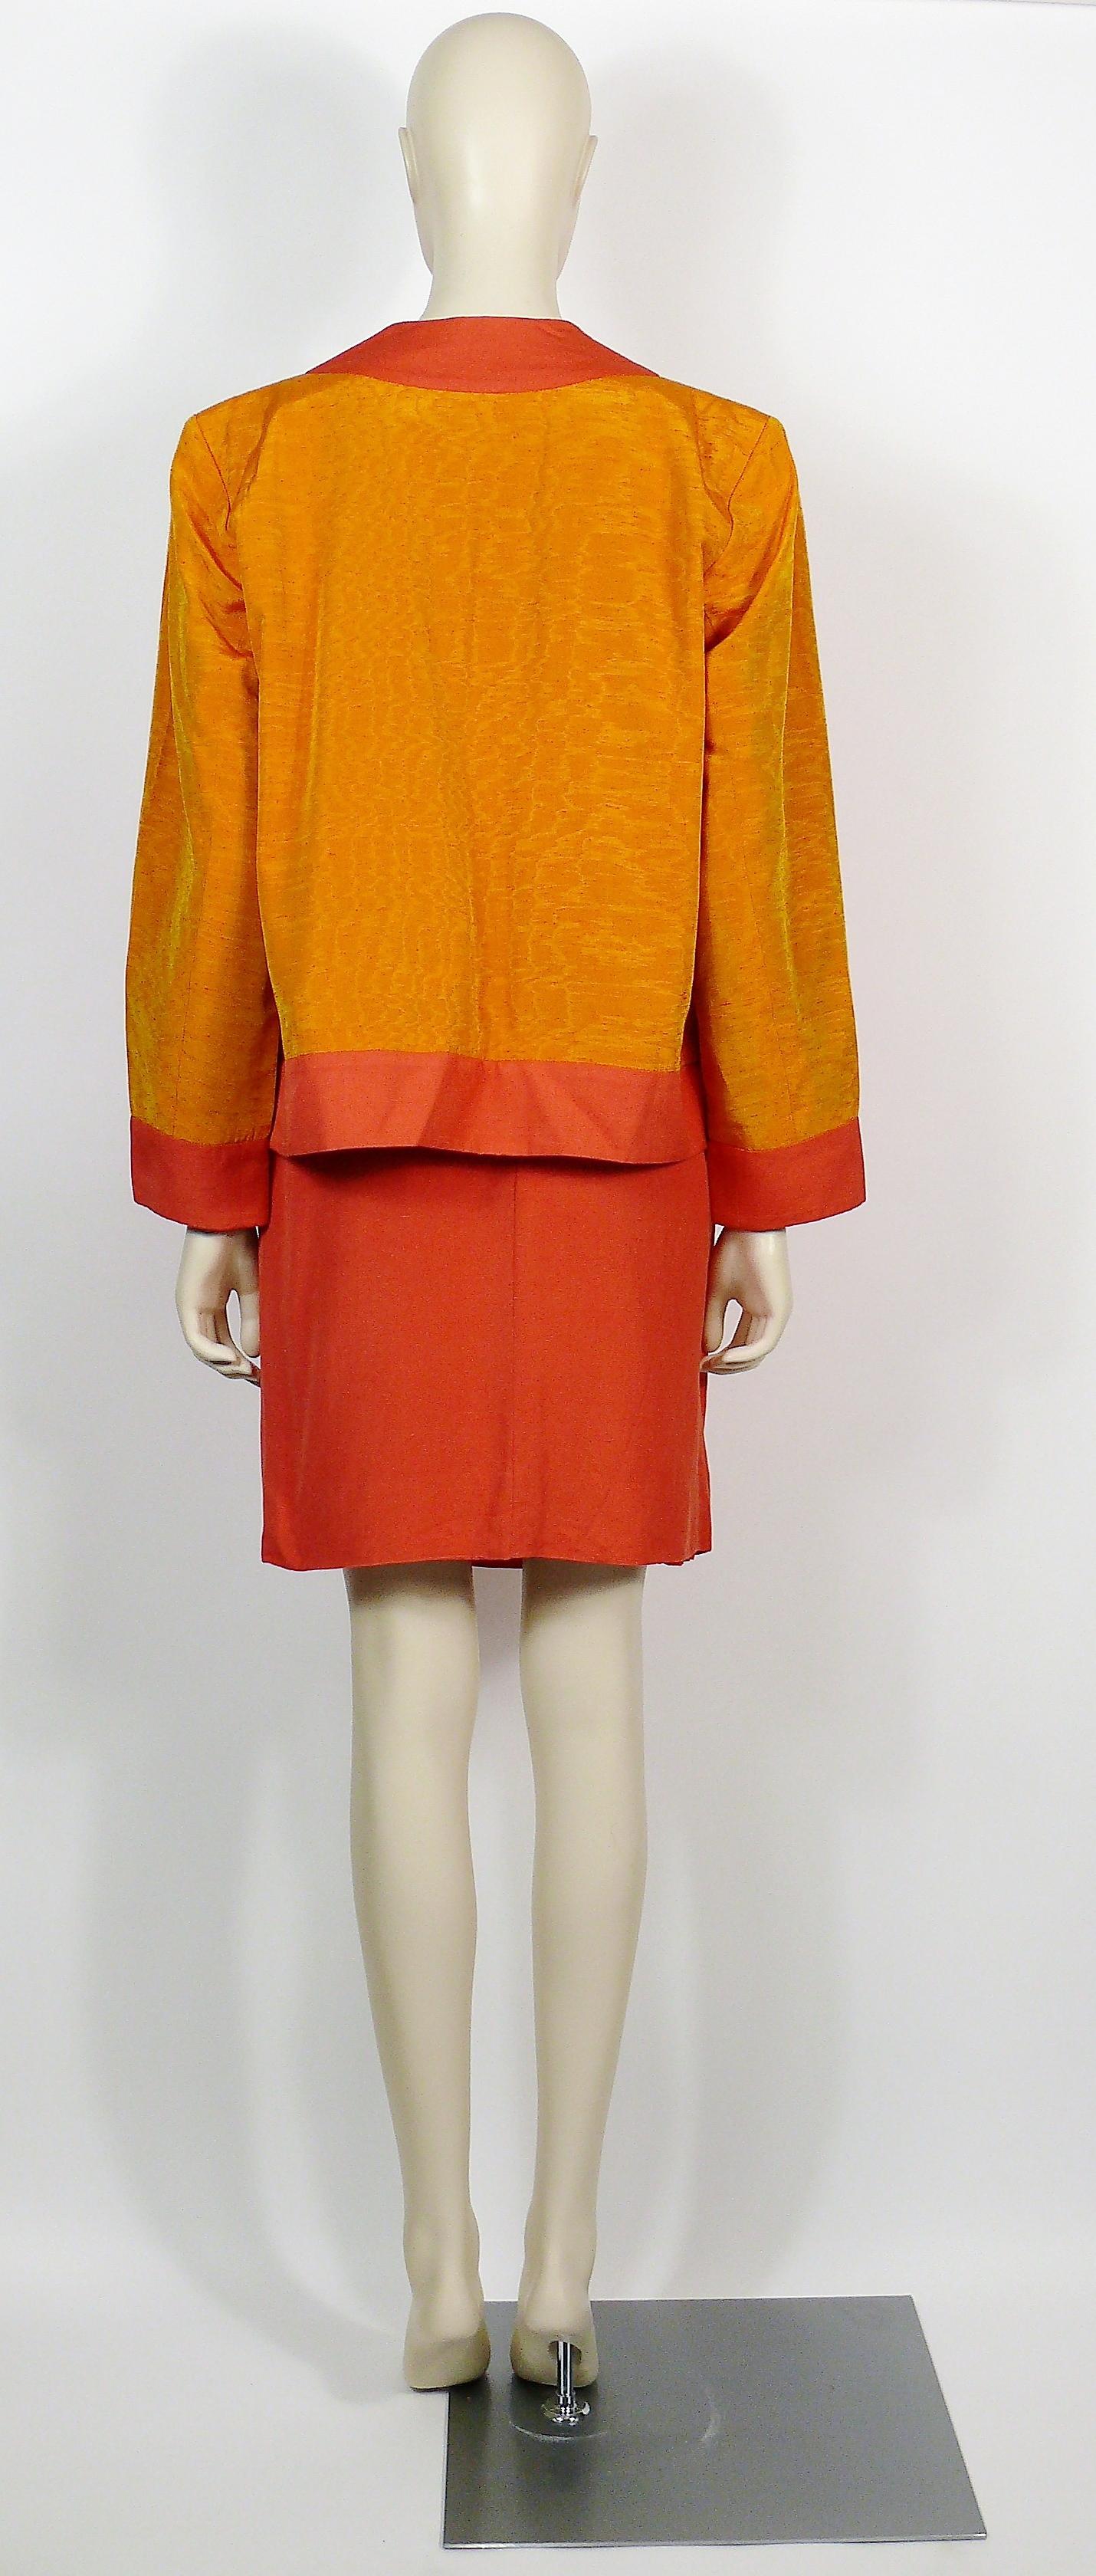 Yves Saint Laurent YSL Oriental Inspired Jacket and Skirt Ensemble For Sale 5